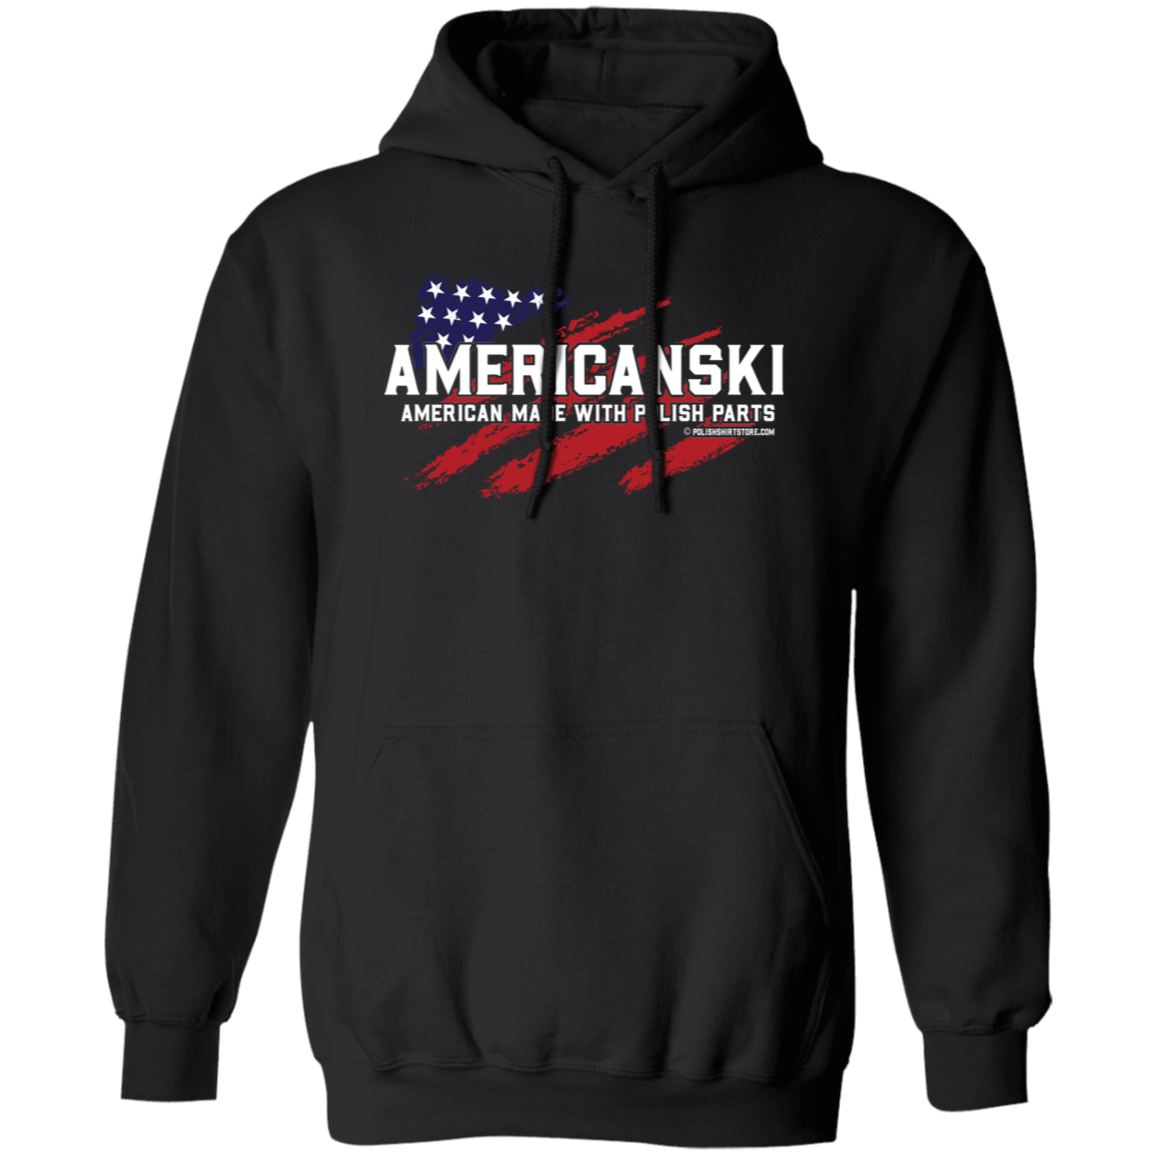 Americanski American Made With Polish Parts Apparel CustomCat G185 Pullover Hoodie Black S